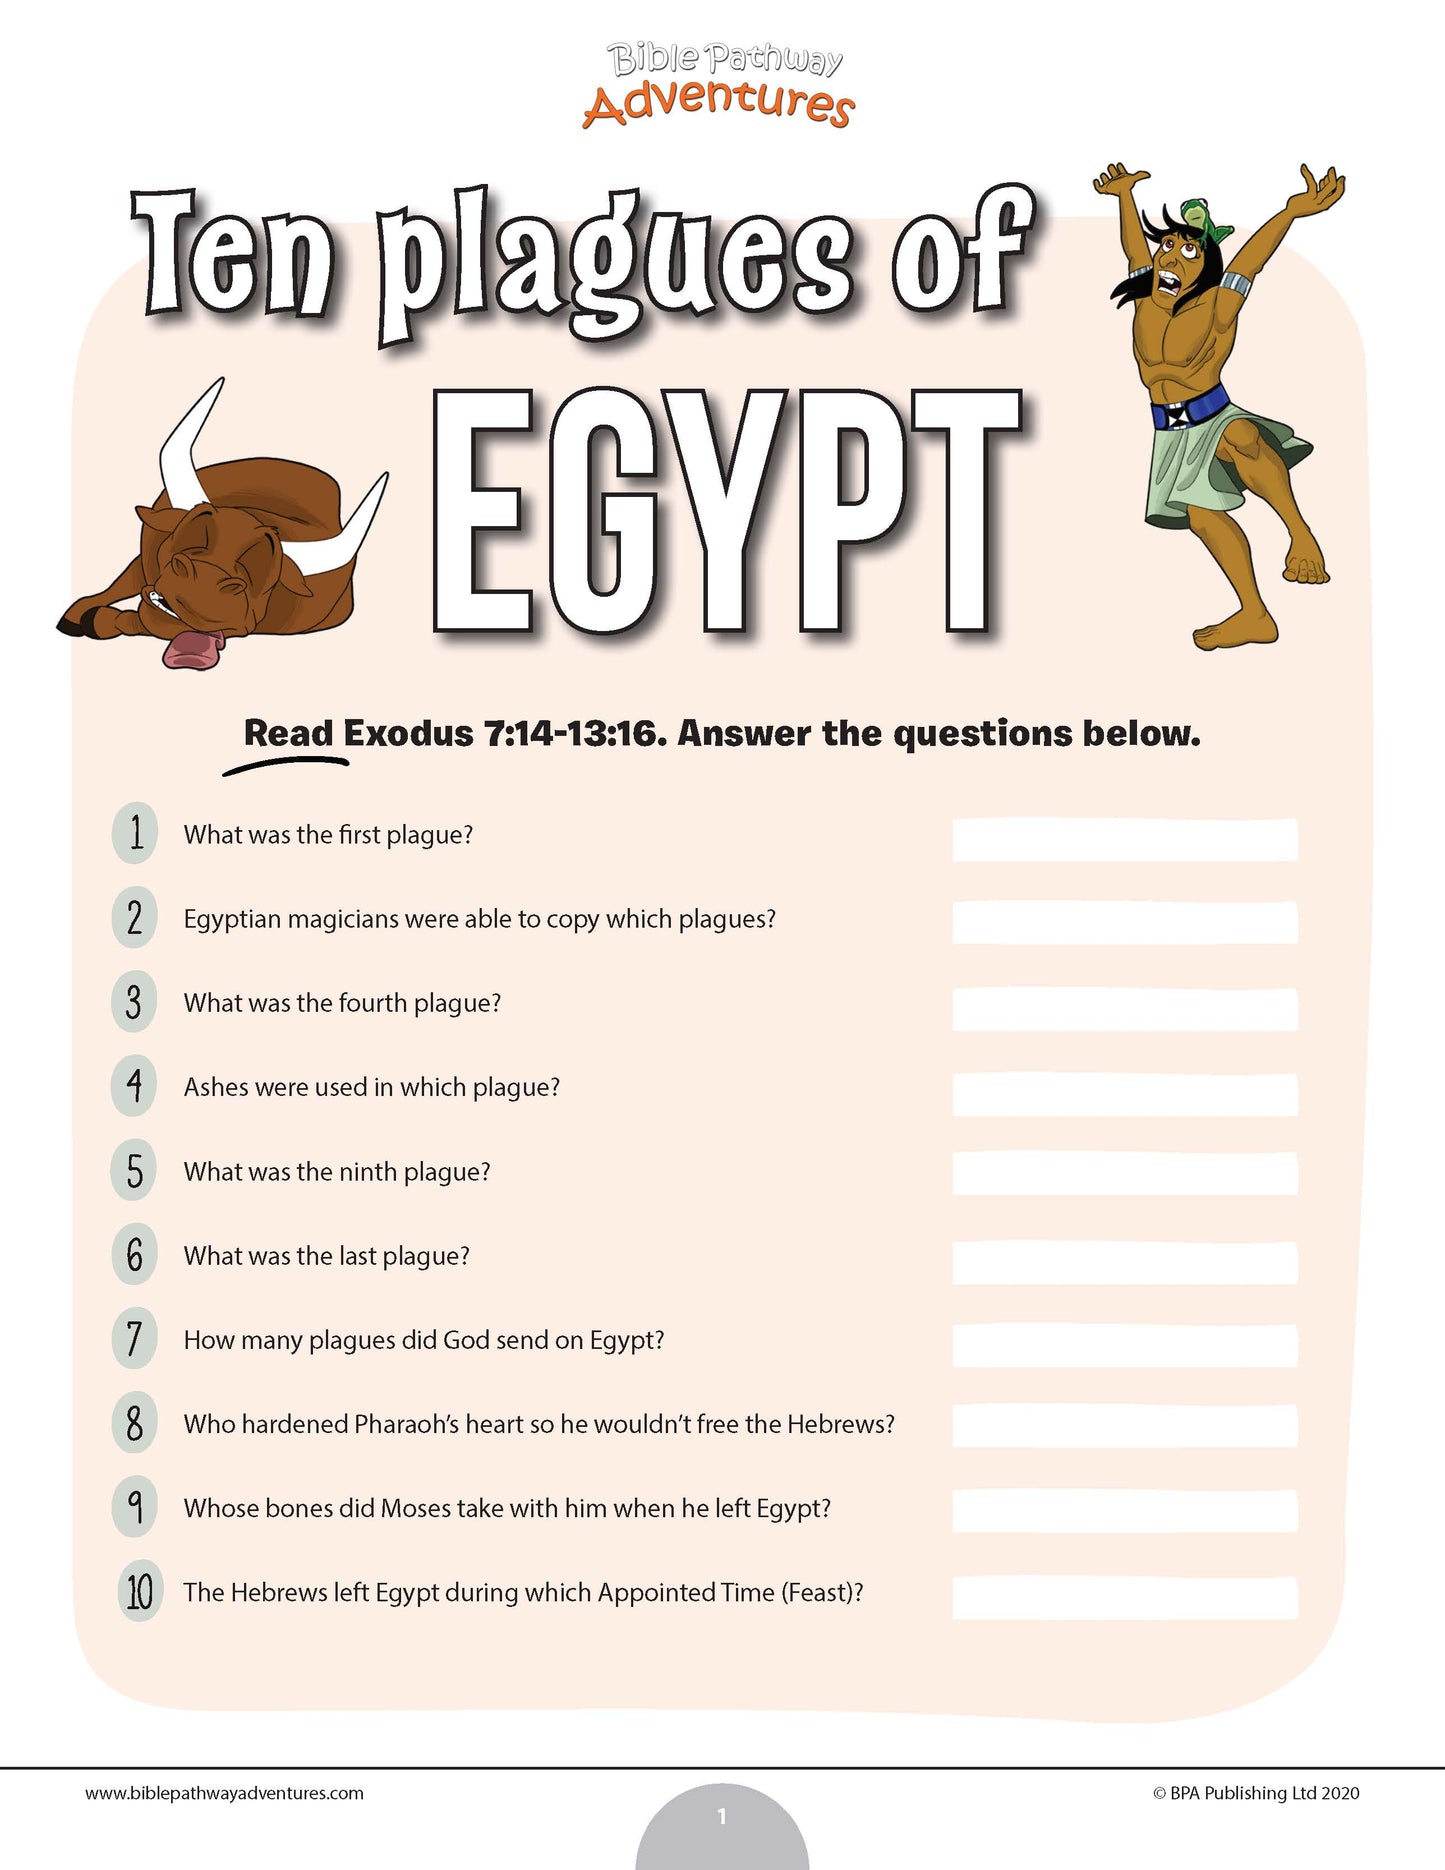 Ten Plagues of Egypt quiz (PDF)